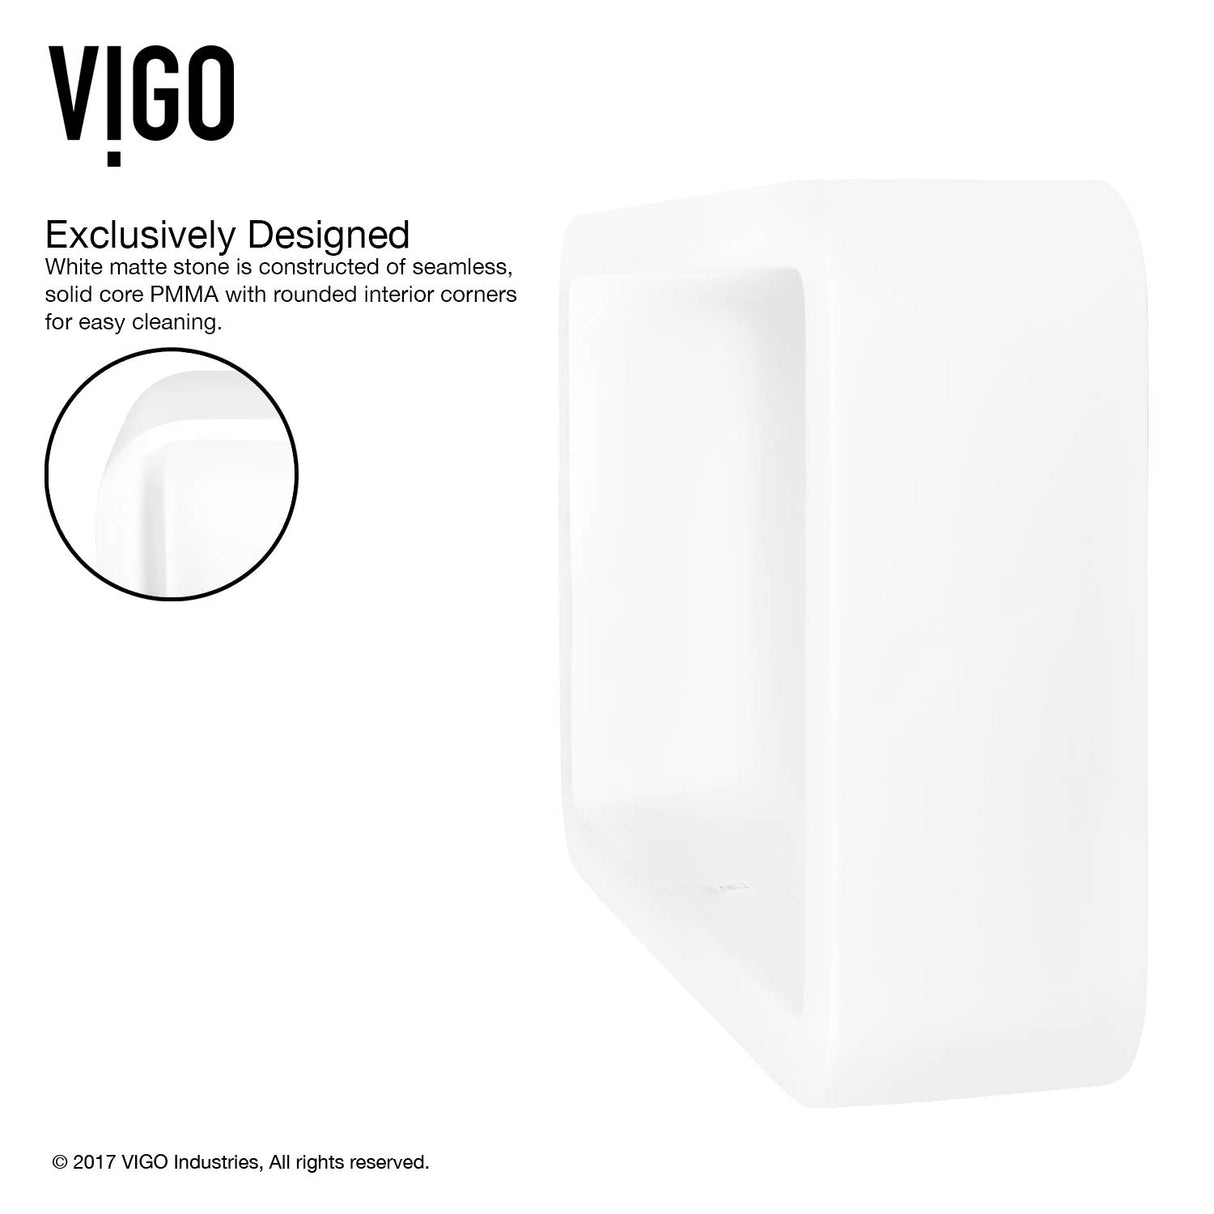 VIGO Petunia 22.75 inch L x 15.75 inch W Over the Counter Freestanding Matte Stone Rectangular Vessel Bathroom Sink in Matte White - Sink for Bathroom VG04002